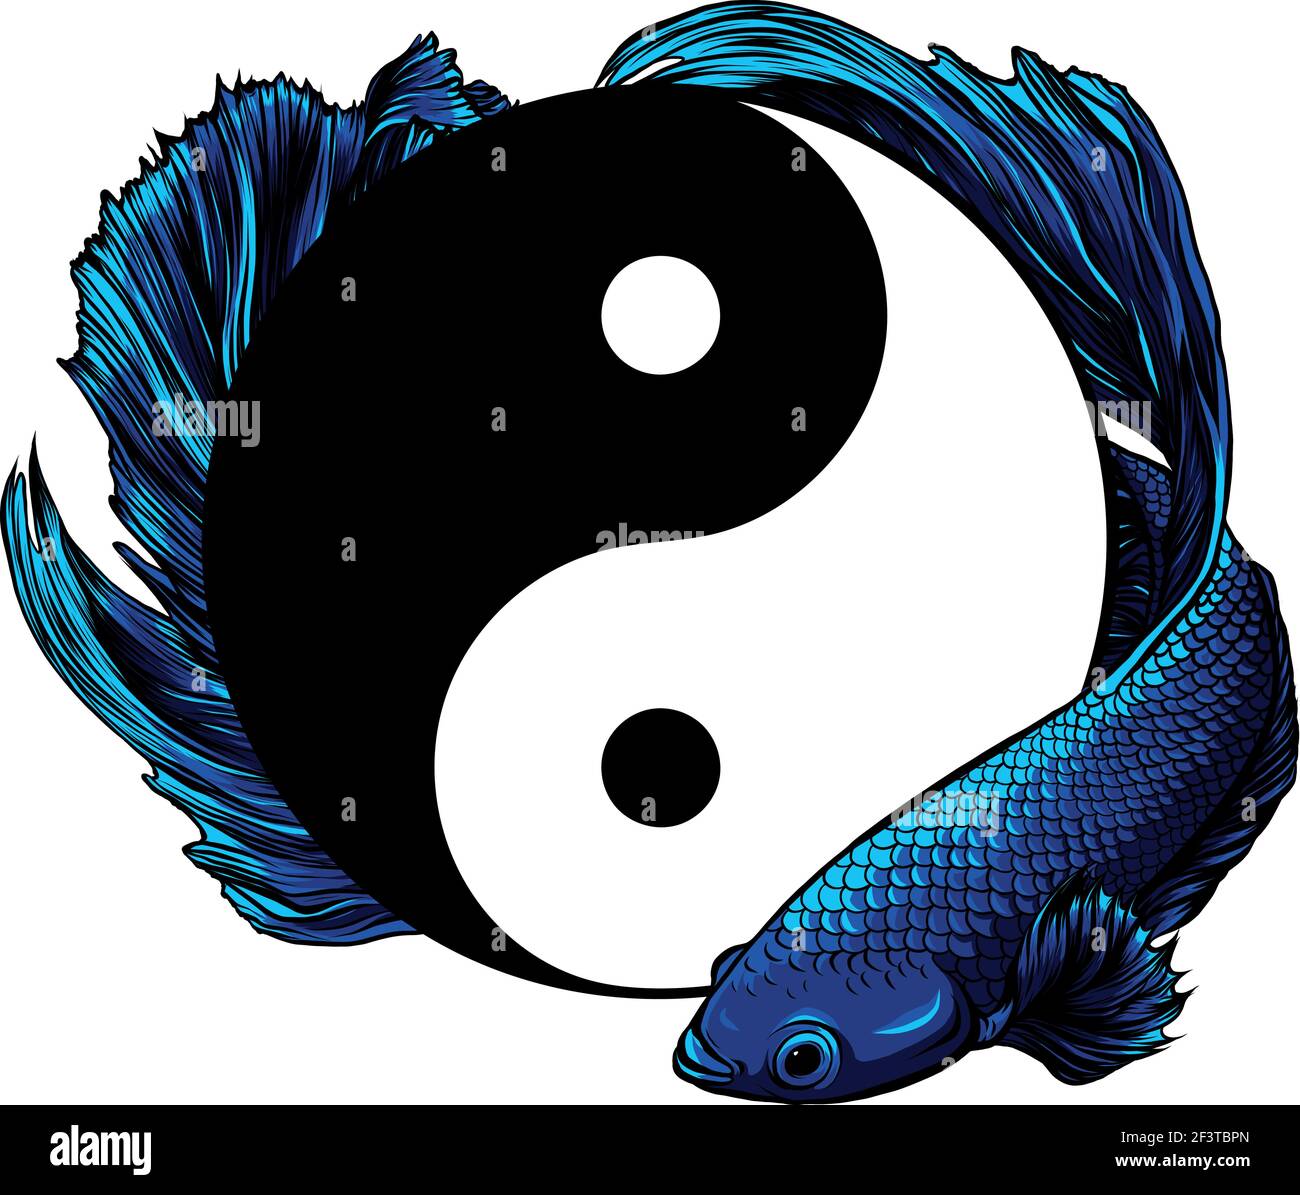 betta splendens fish around Yin Yang vector illustration Stock Vector